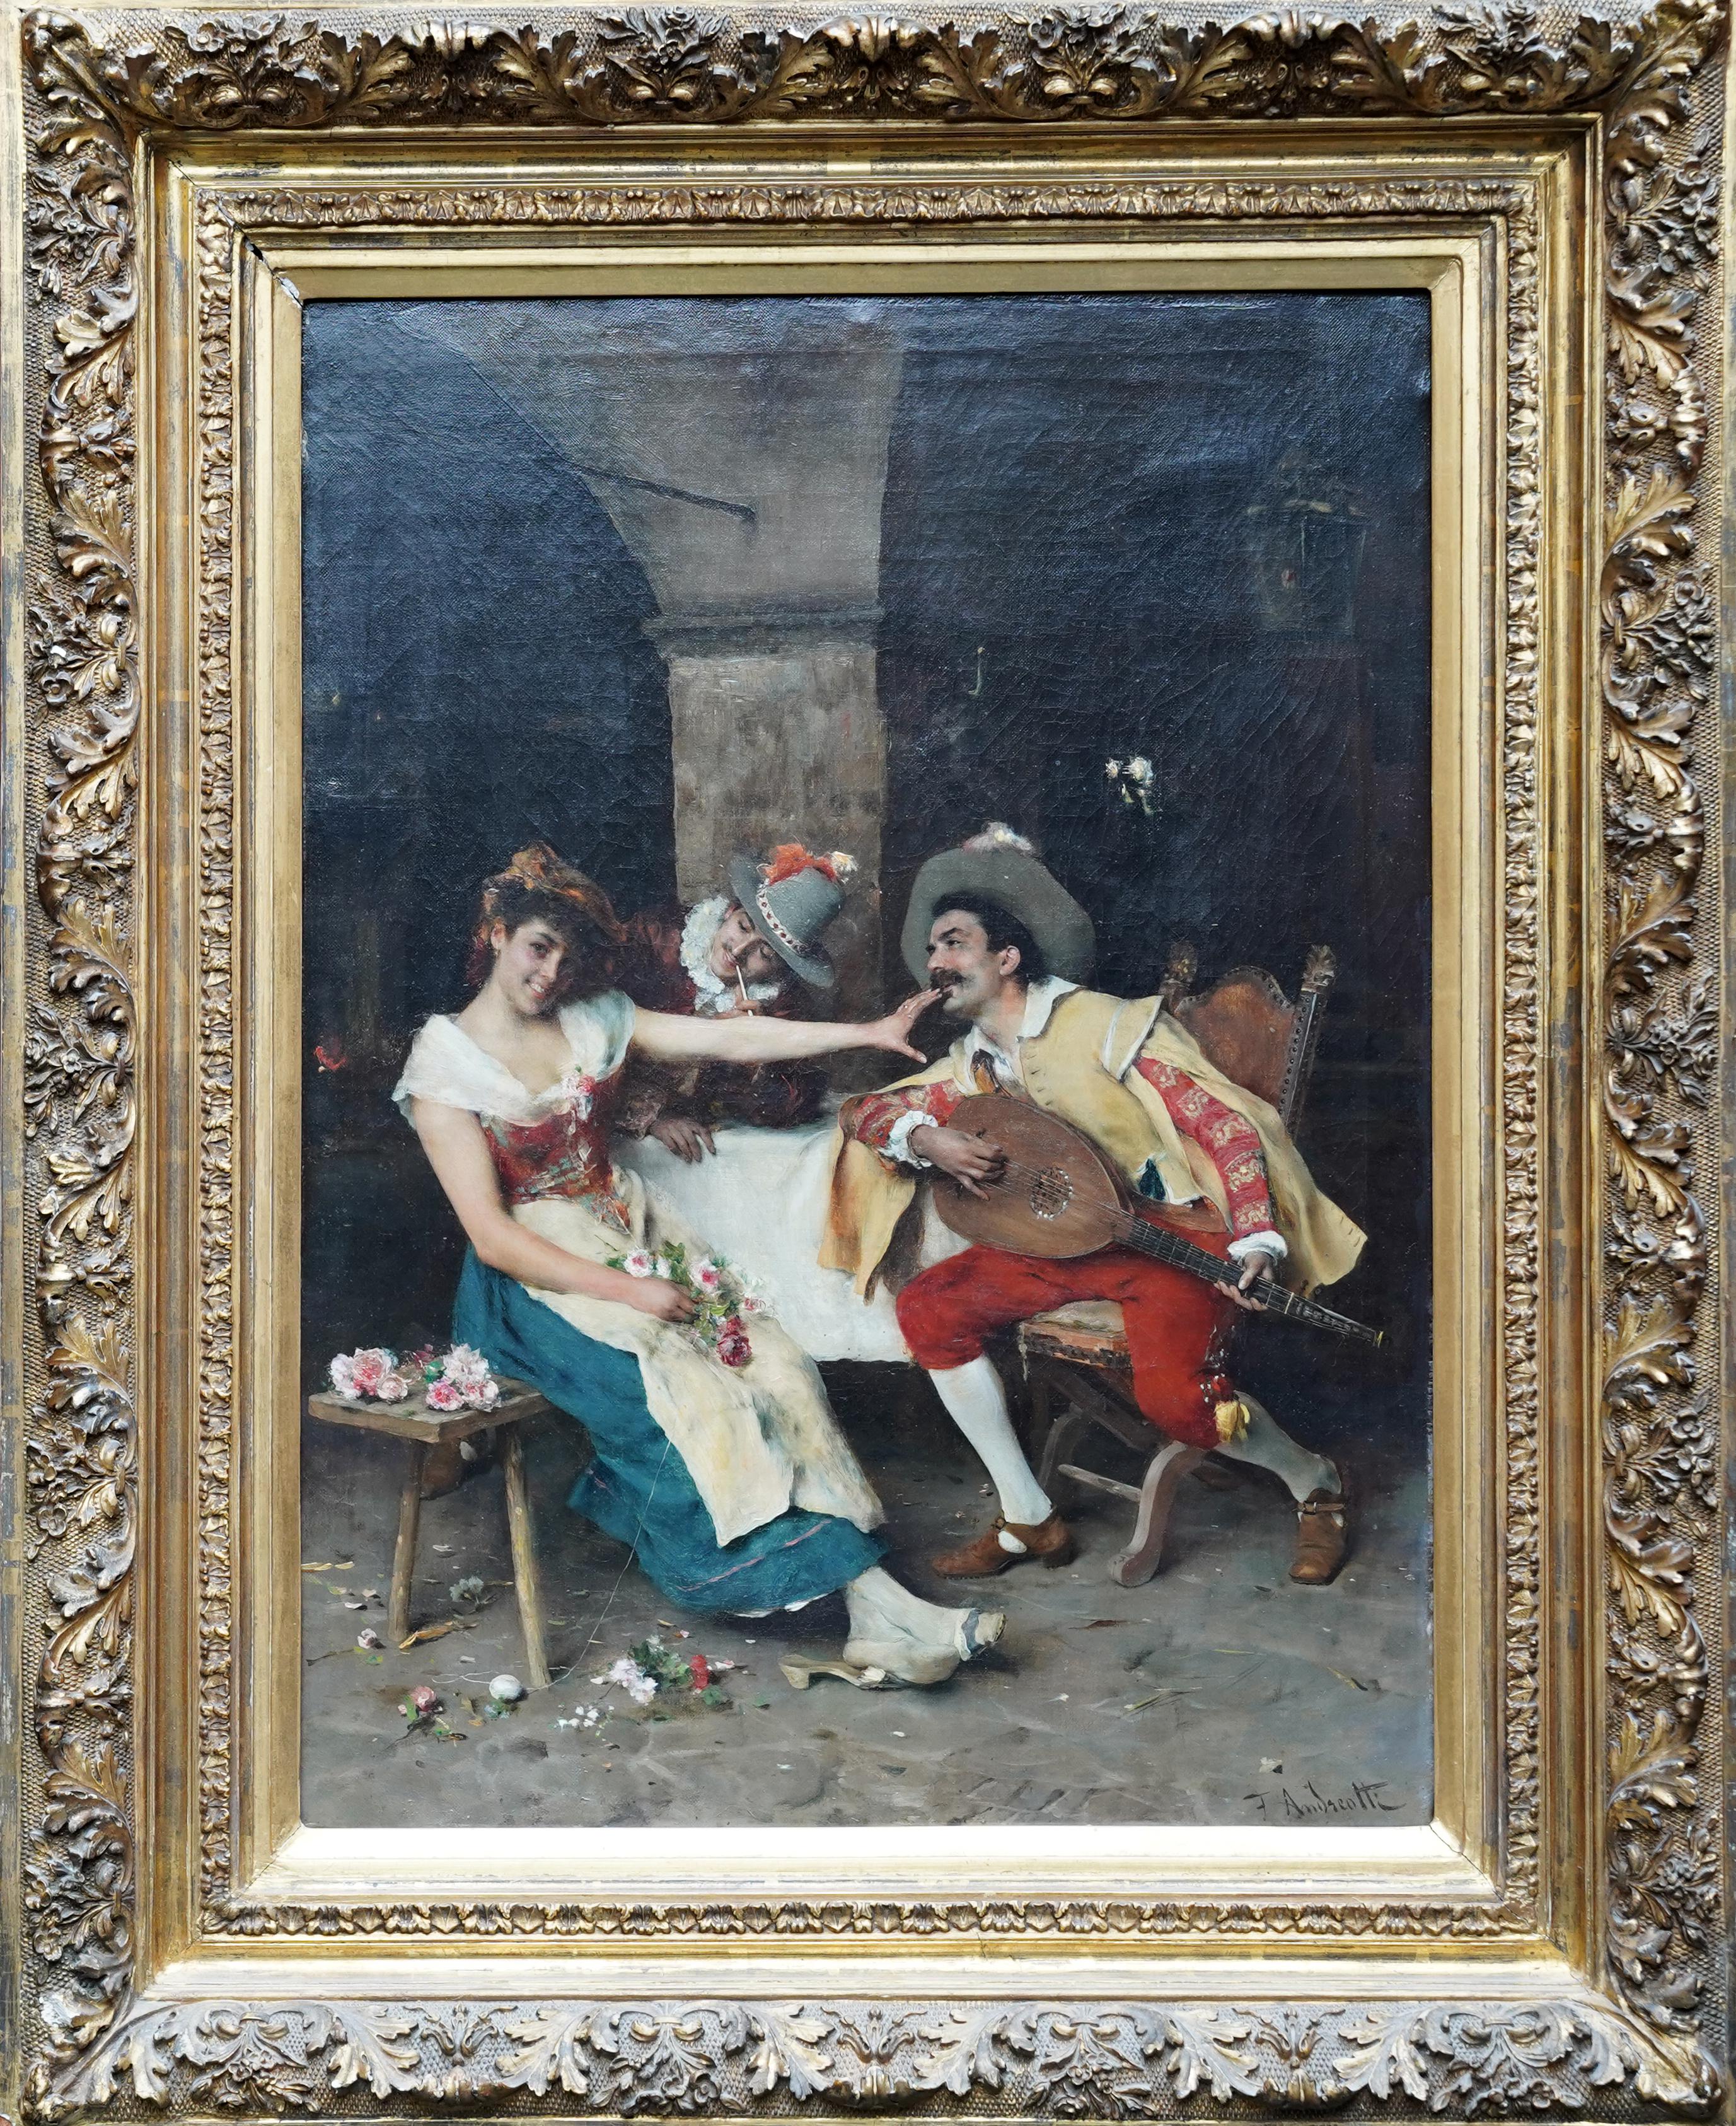 Federico Andreotti Figurative Painting – The Serenade - Italienische figurative Ölmalerei von Musikern aus dem 19. Jahrhundert